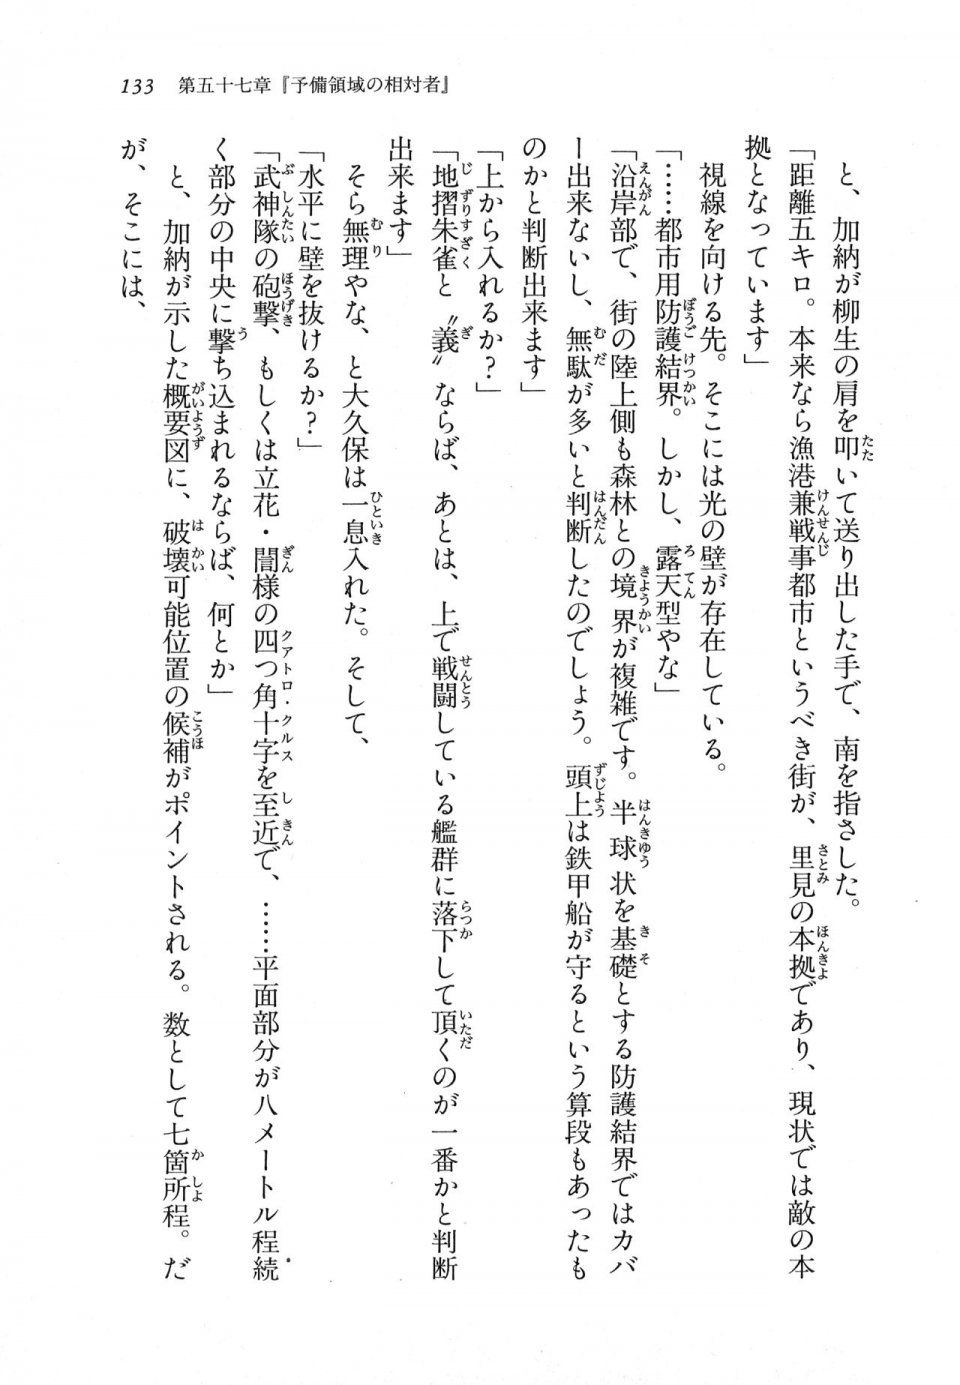 Kyoukai Senjou no Horizon LN Vol 18(7C) Part 1 - Photo #133